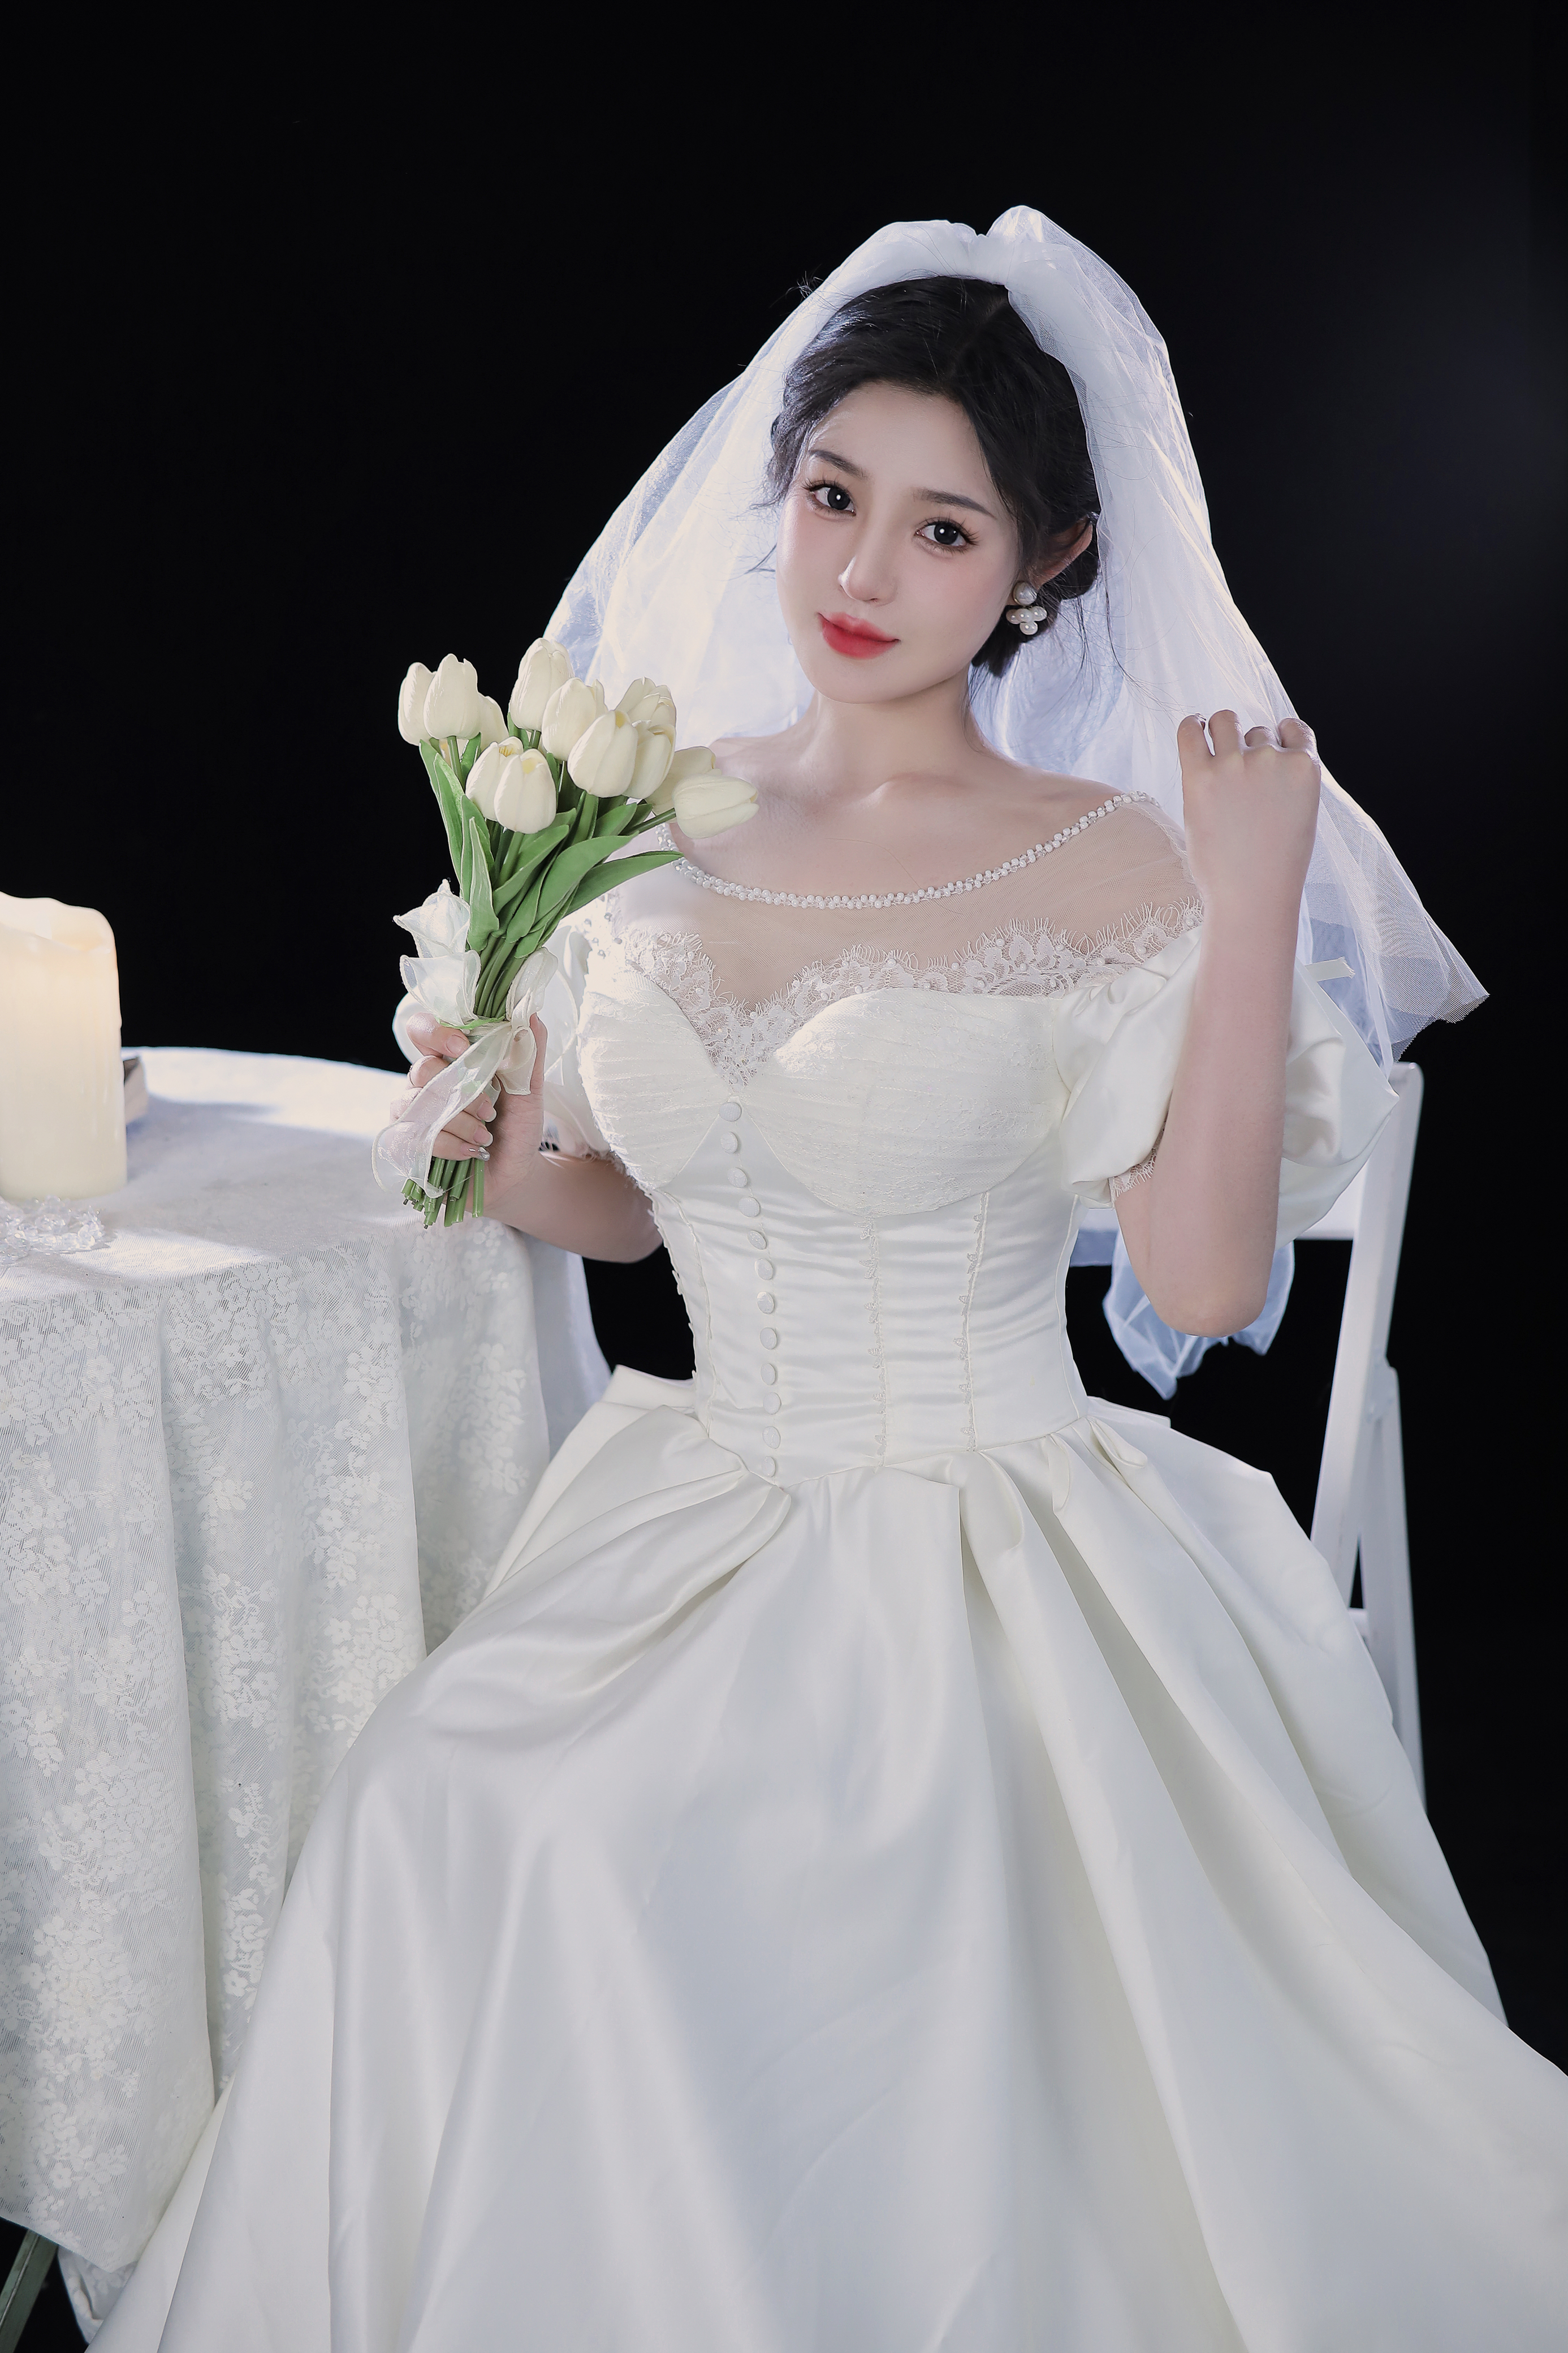 Wedding Dress Bridal Veil Portrait Display Asian Women Model Brunette Red Lipstick Brown Eyes Brides 2773x4160